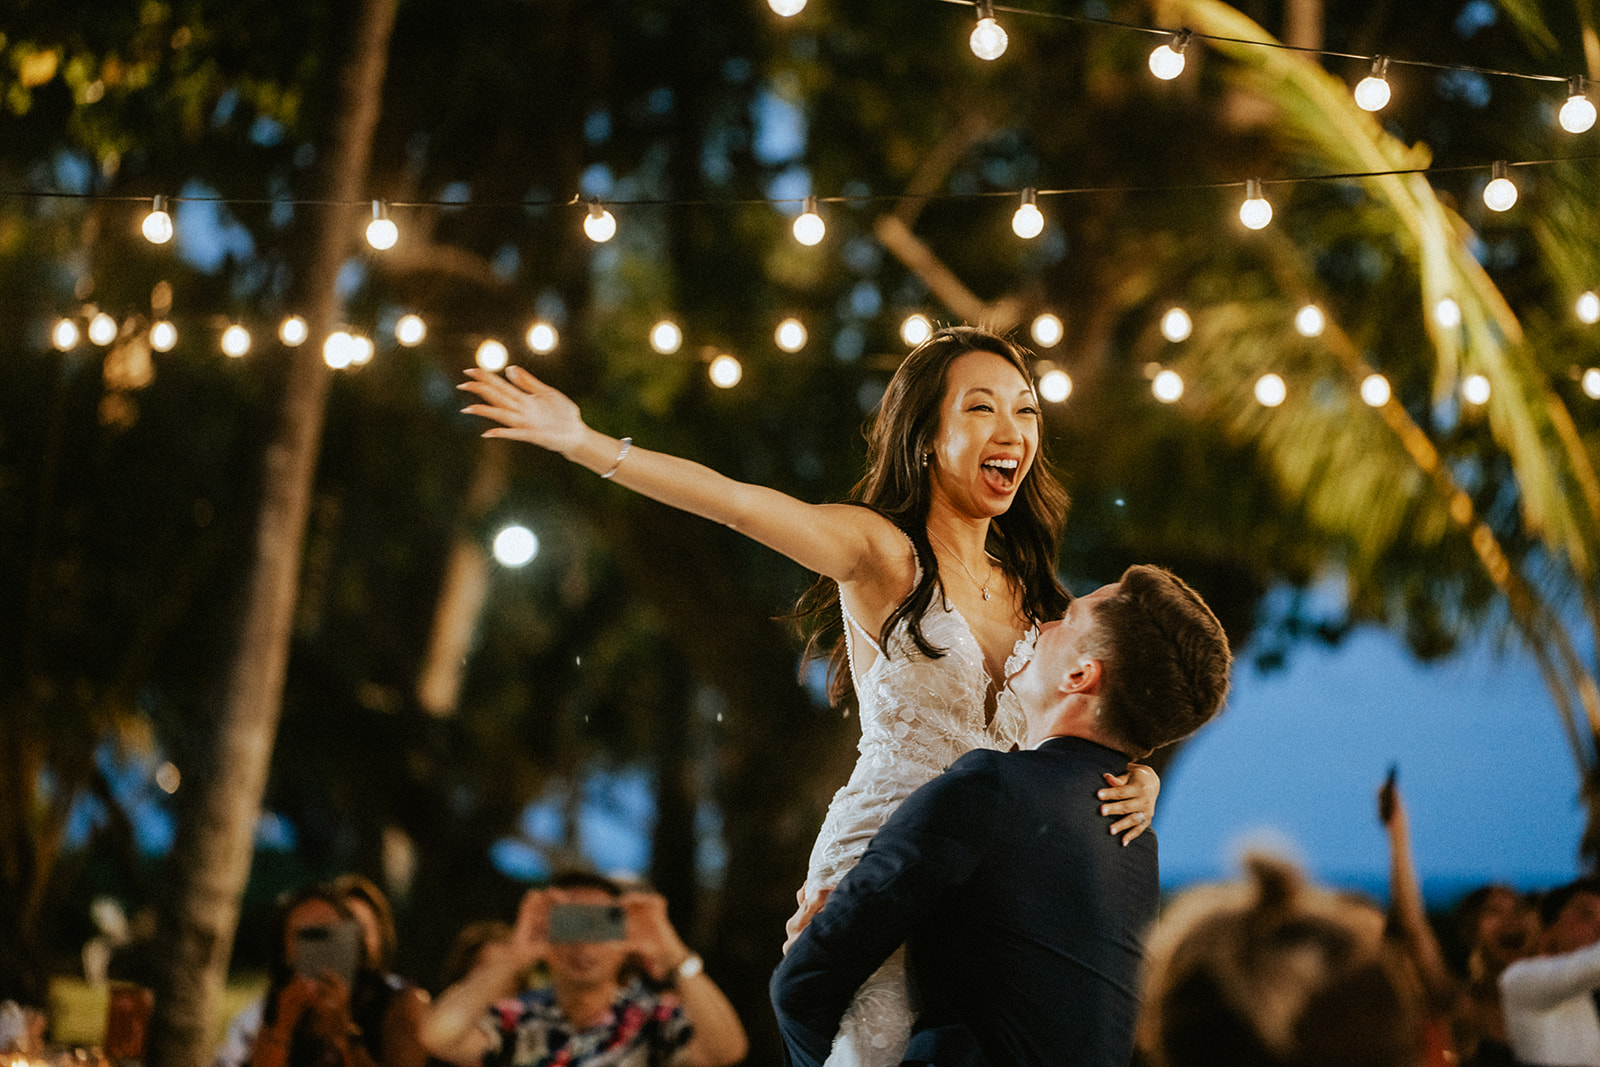 Groom and Bride have a first dance at Lanikuhonua during dusk under cafe lights